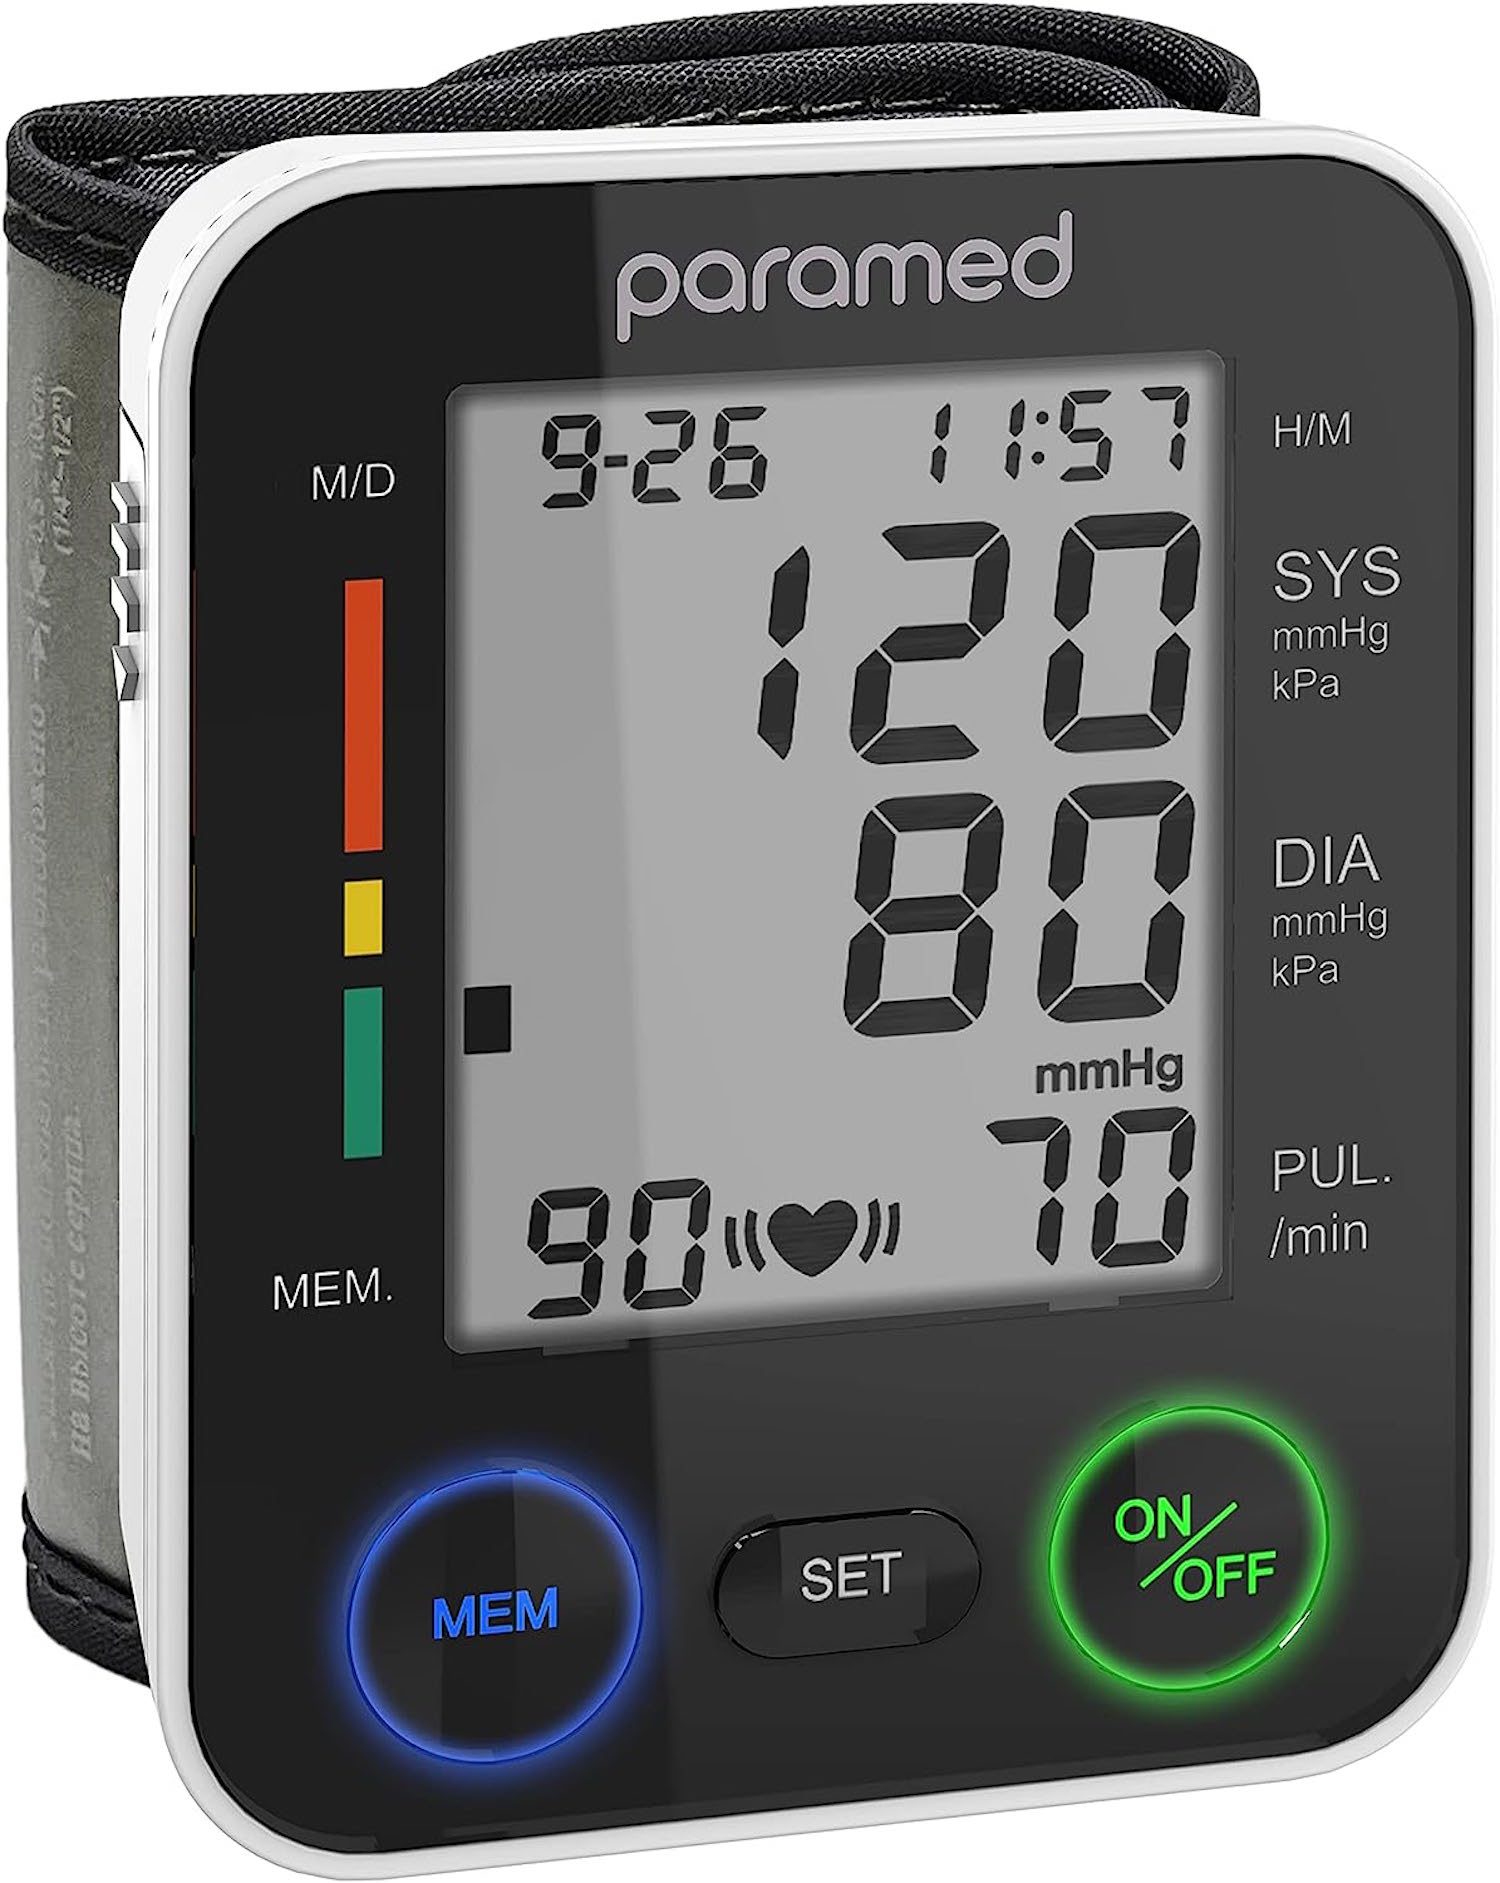 LotFancy Wrist Blood Pressure Monitor, BP Cuff (5.3-8.5), 2 Users, 120  Memory, Automatic Digital Blood Pressure Machine, Home BP Gauge for  Irregular Heartbeat Detection